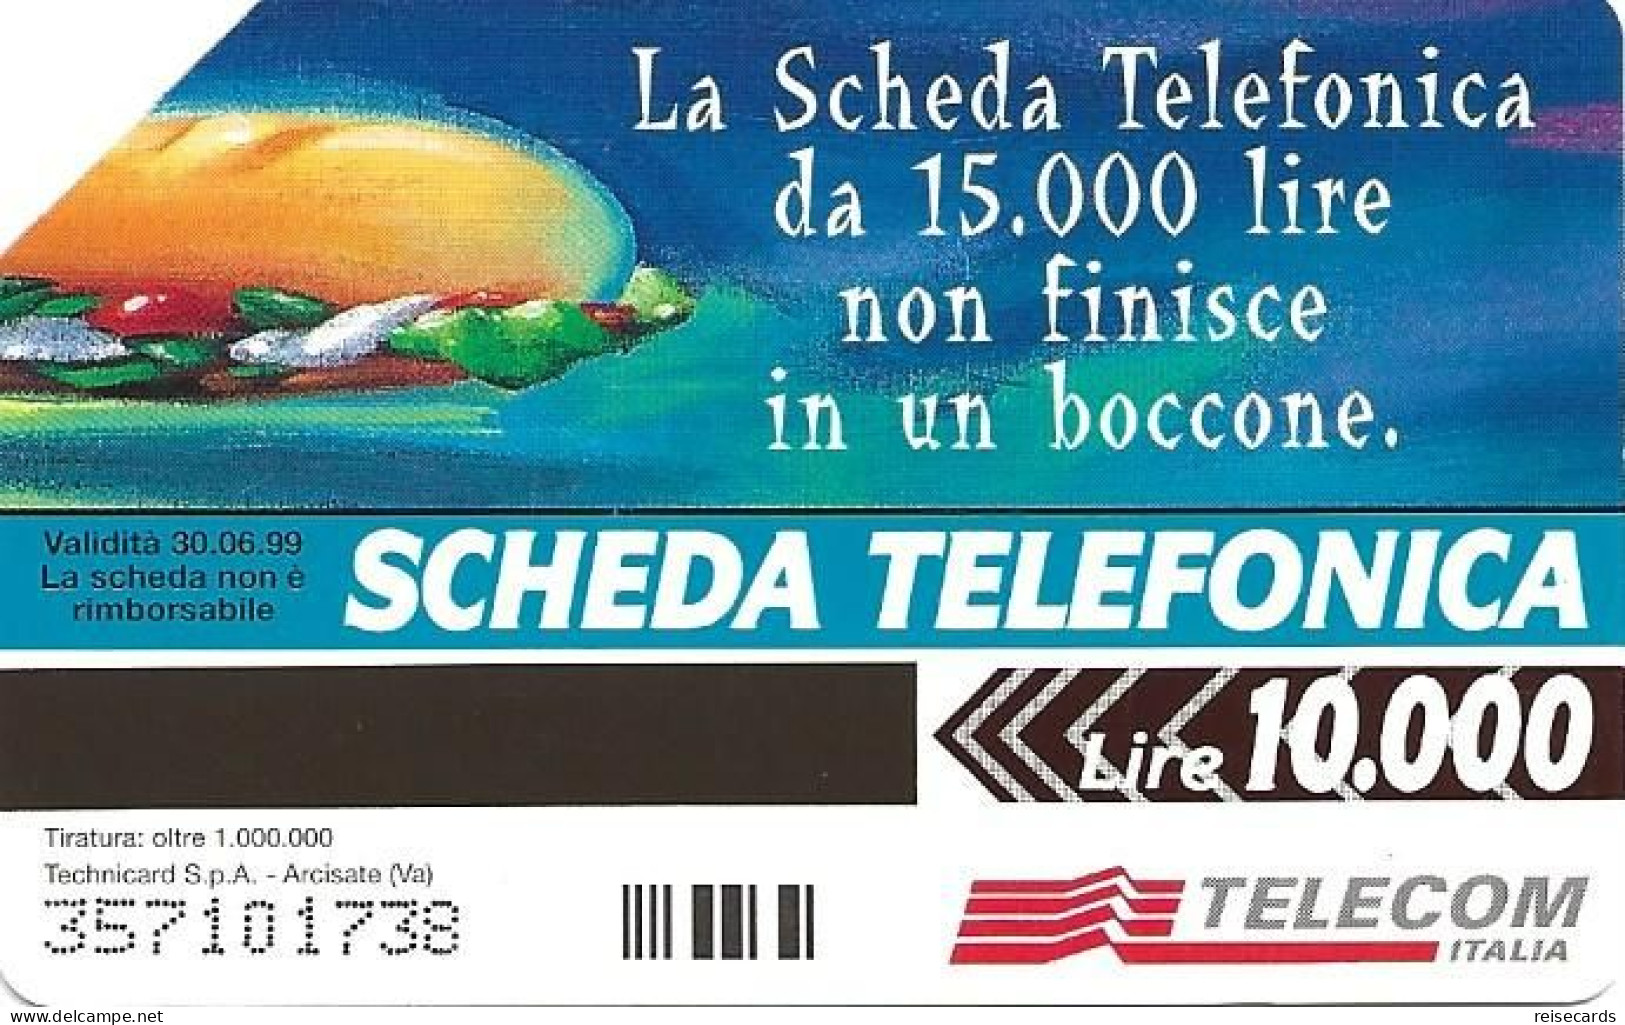 Italy: Telecom Italia - La Scheda Telefonica, Parlate Con Più Gusto (Tiratura: Oltre) - Públicas  Publicitarias